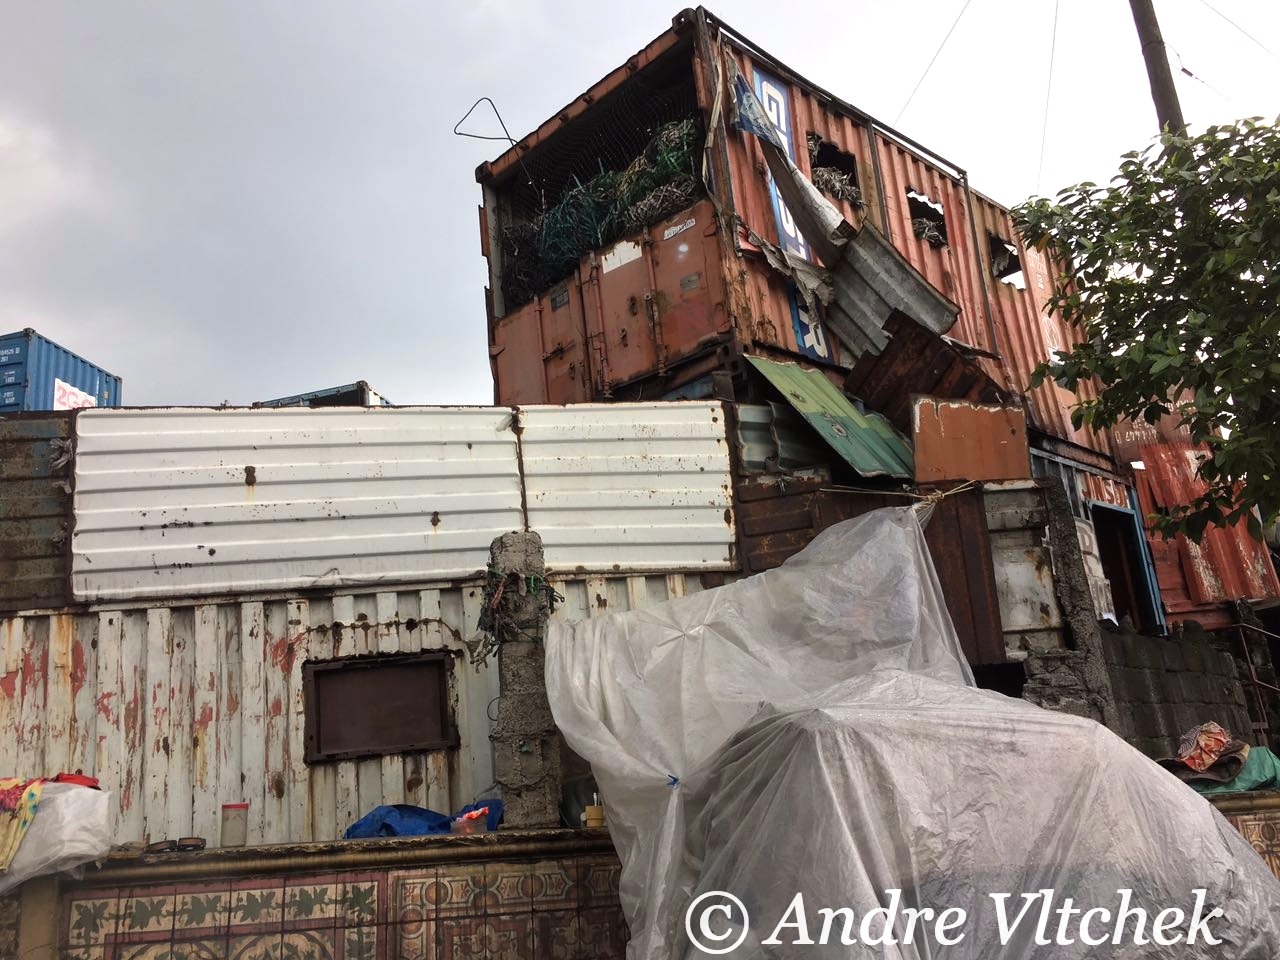 Inhabited container at Baseco slum